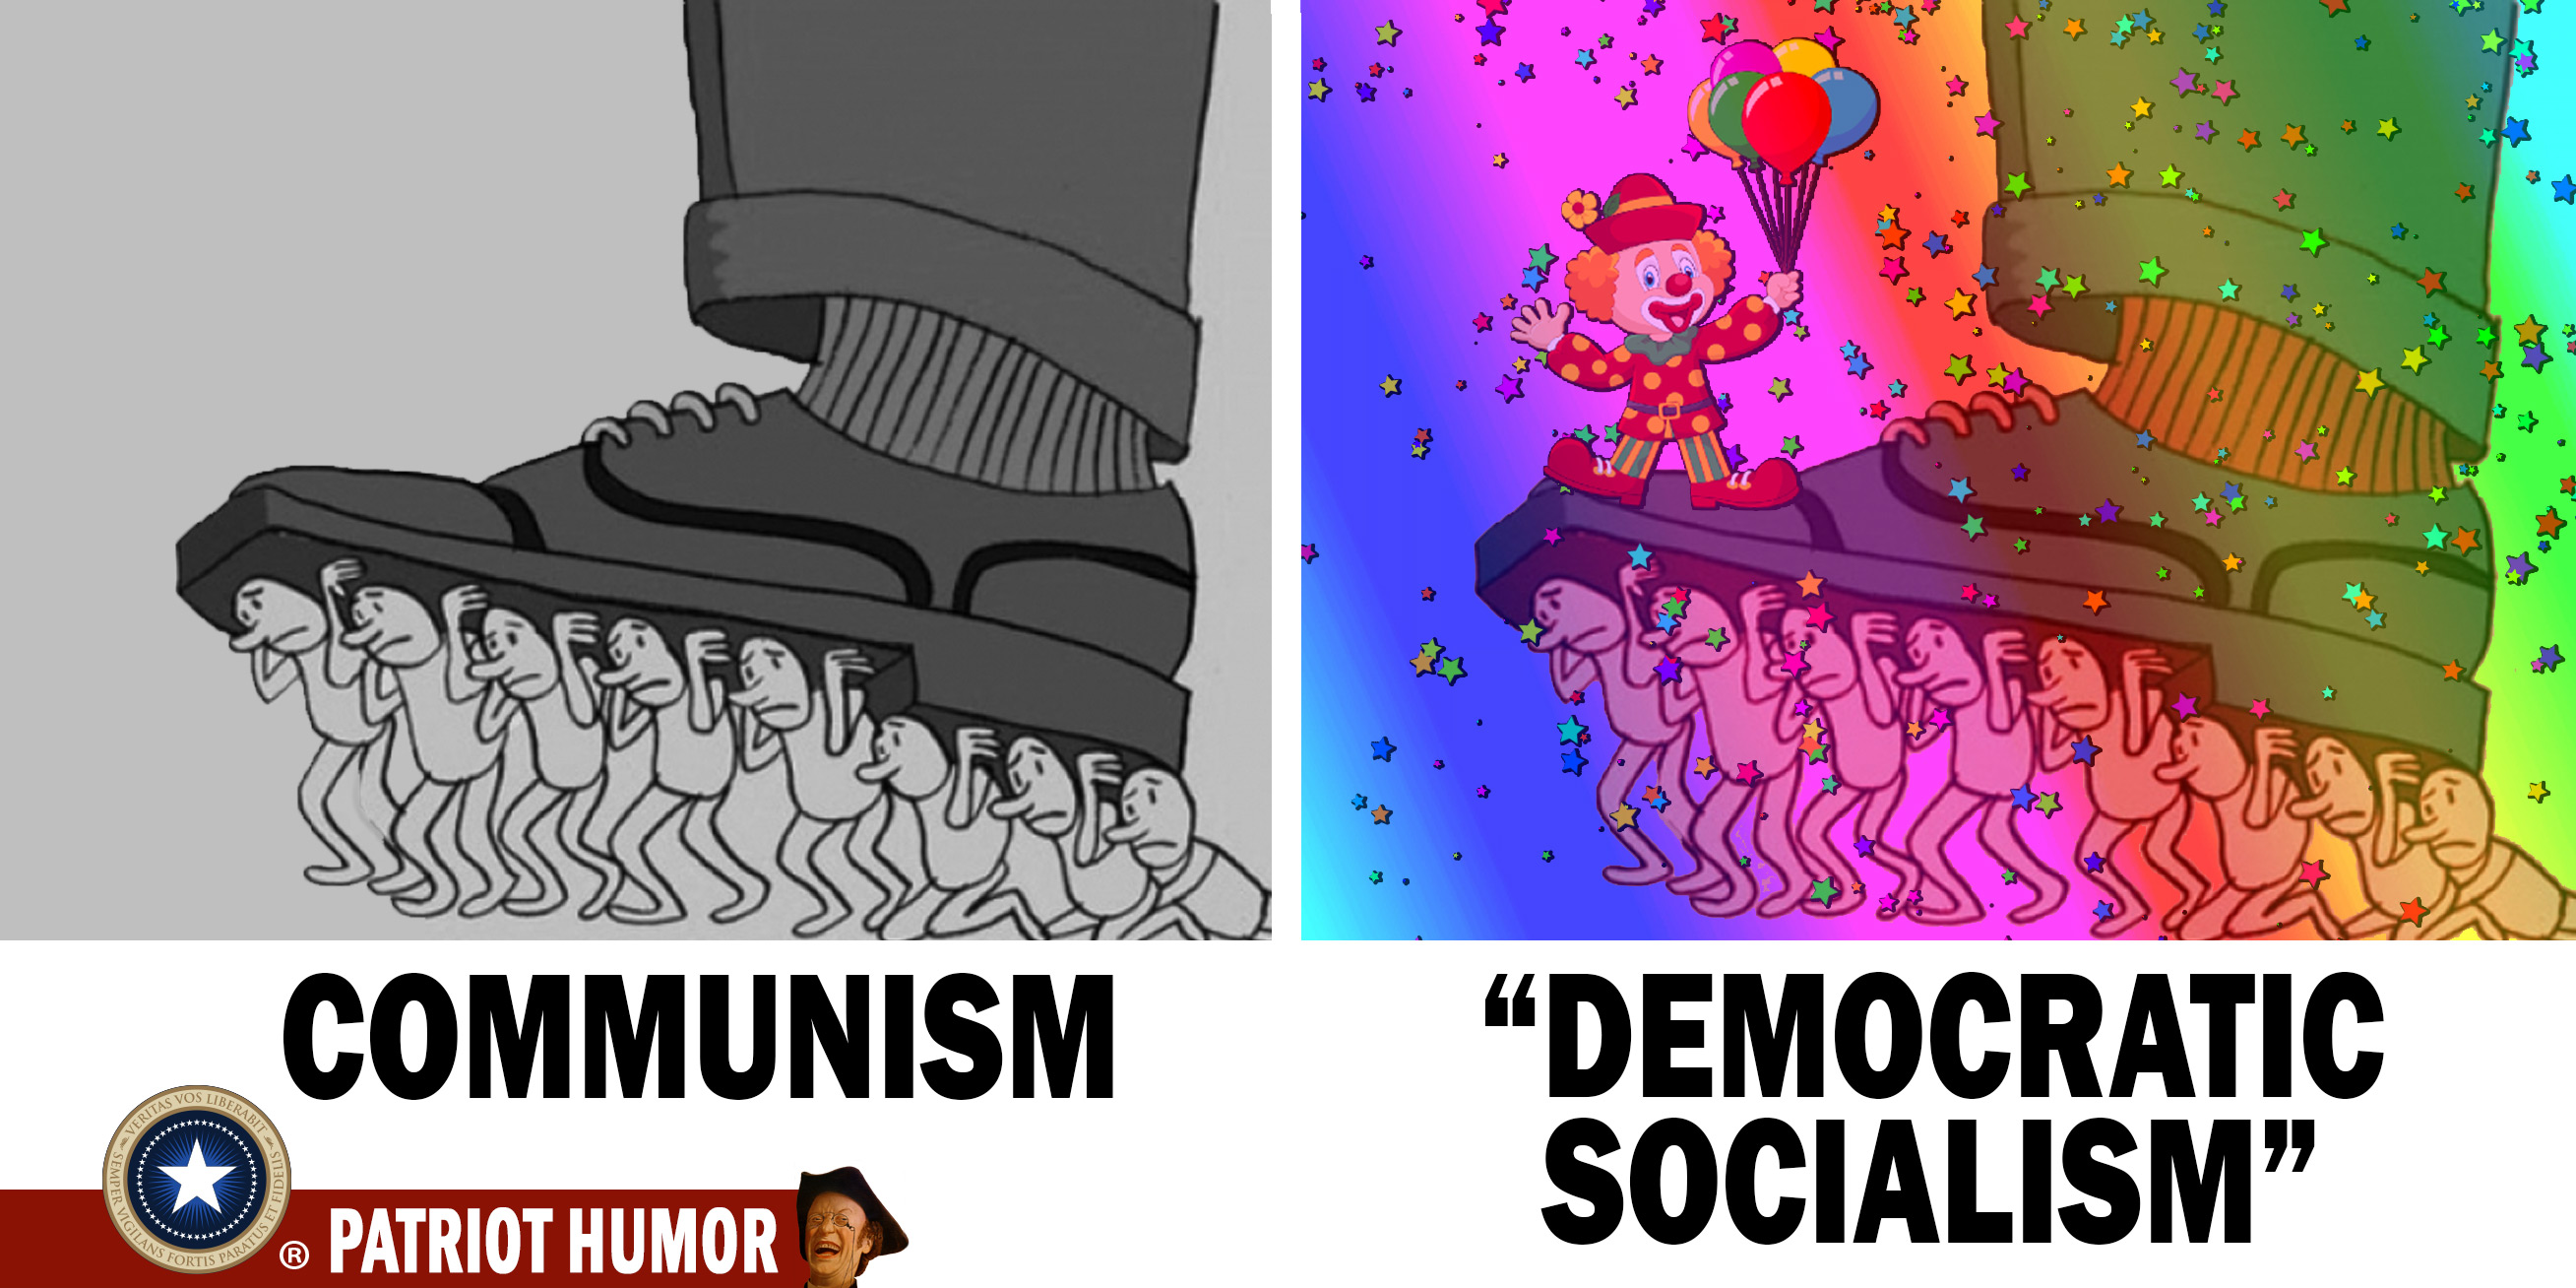 socialism vs communism - Communism Democratic Socialism Patriot Humor